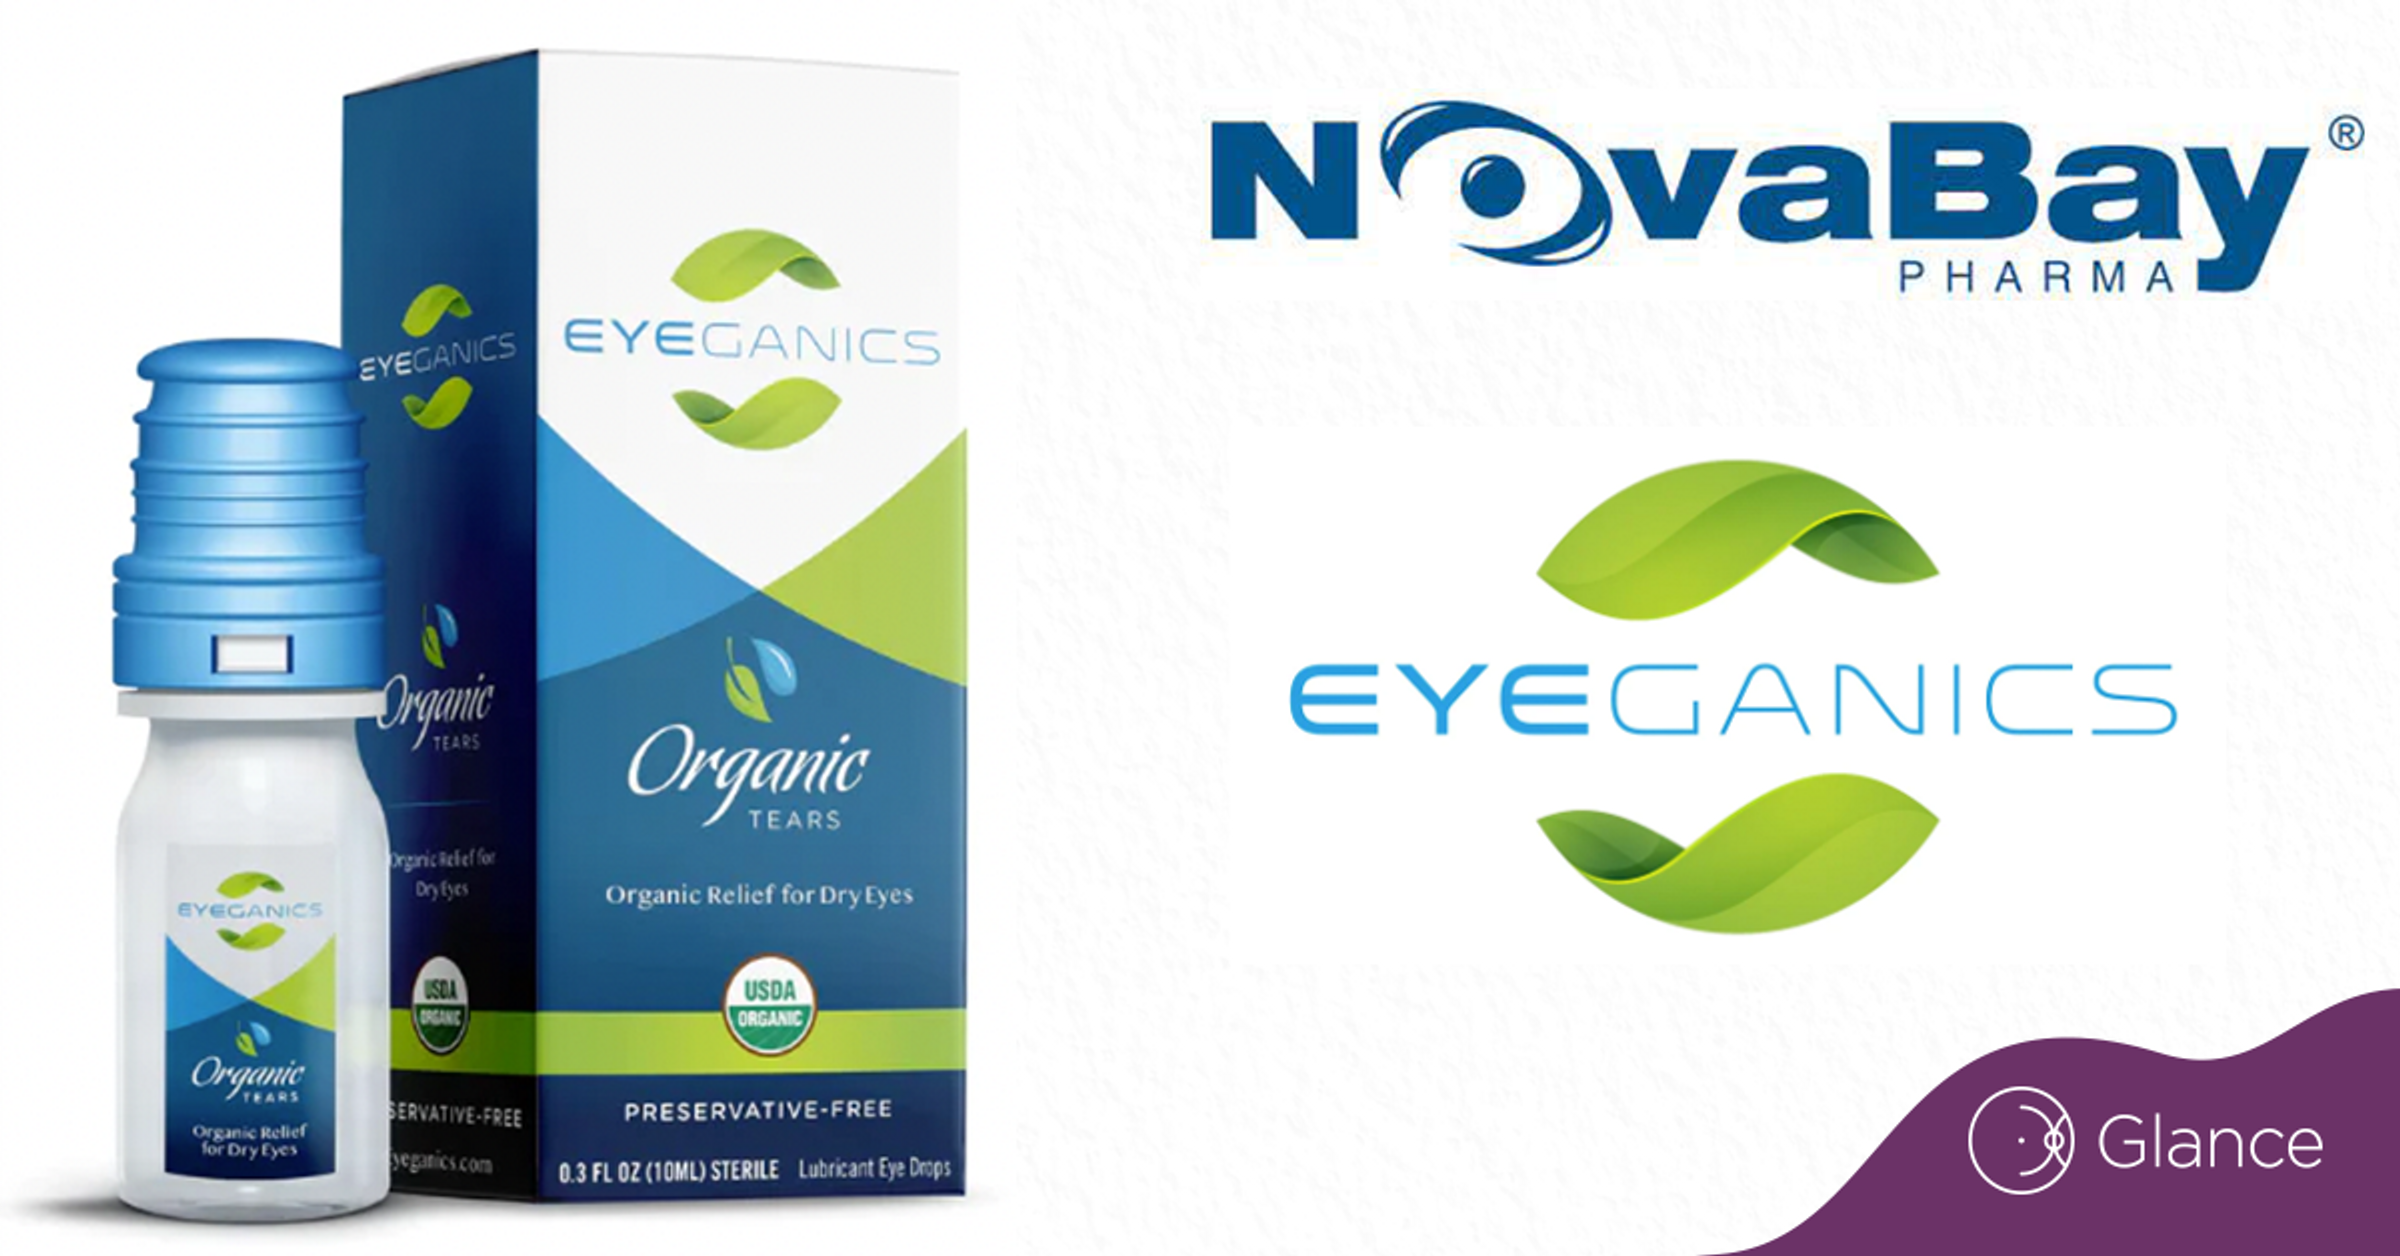 NovaBay partners with Eyeganics for OTC organic eye drop